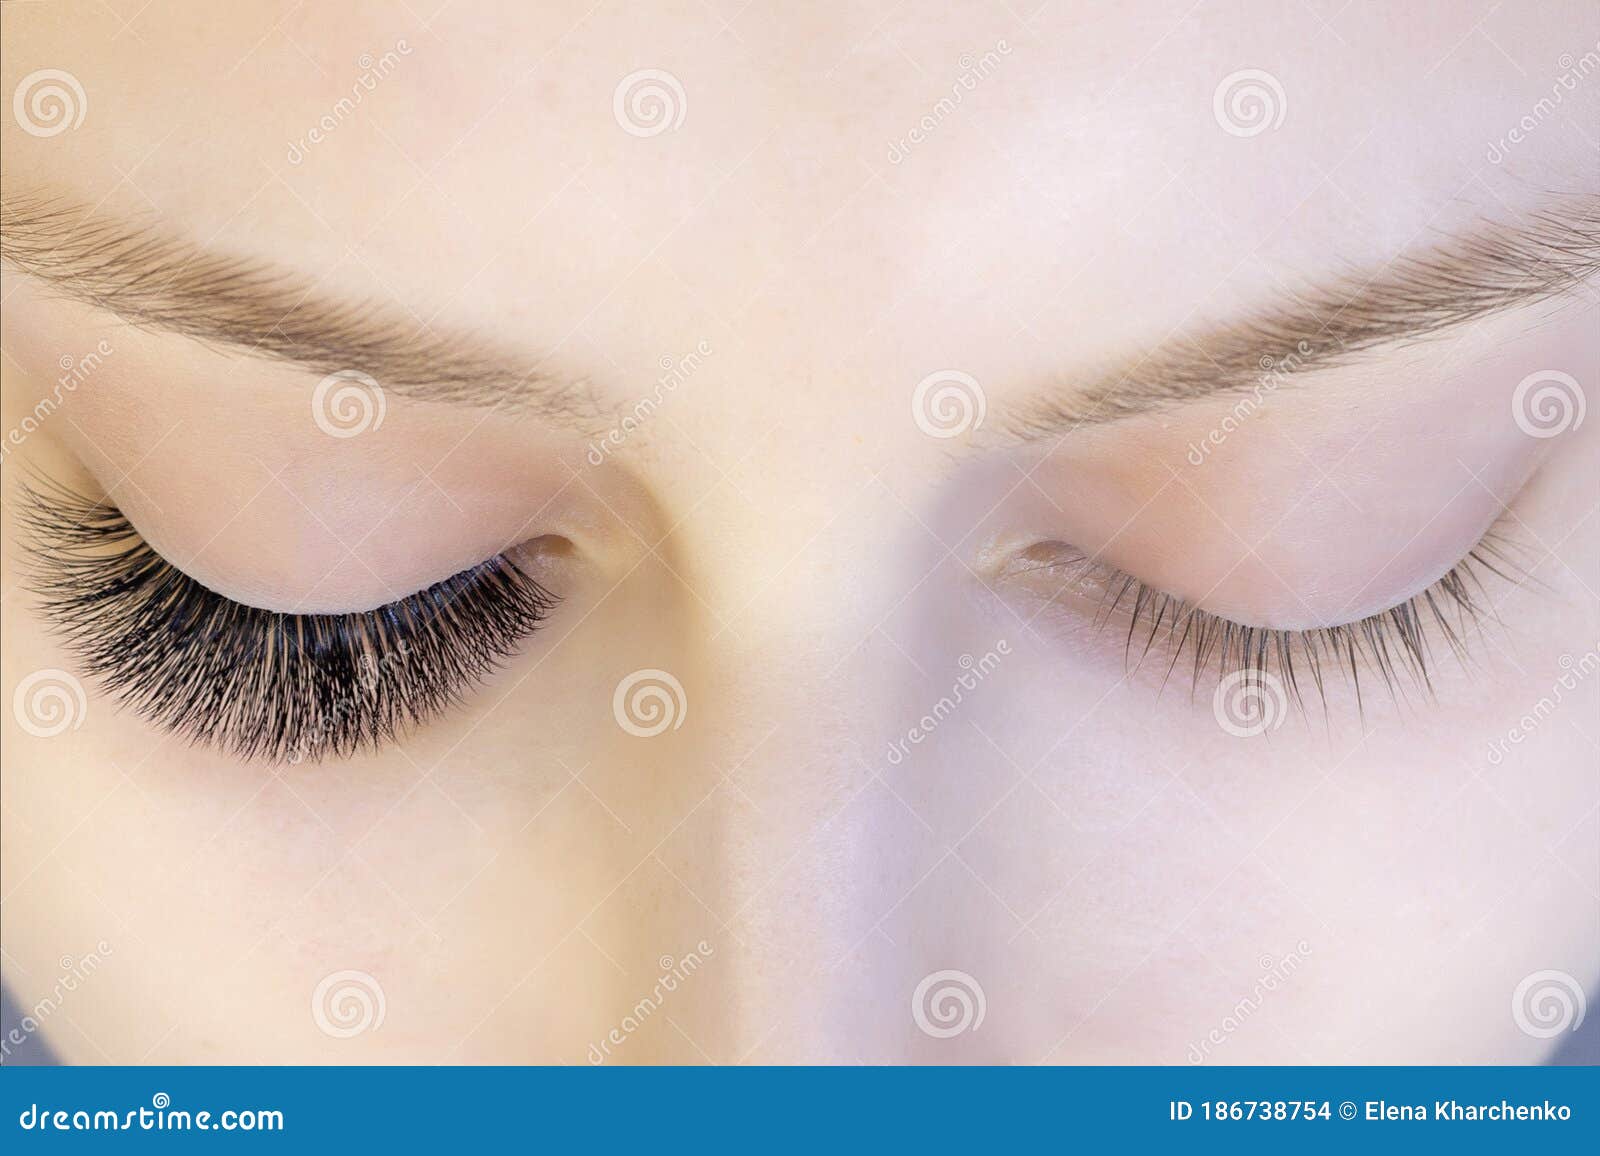 eyelash extension procedure.